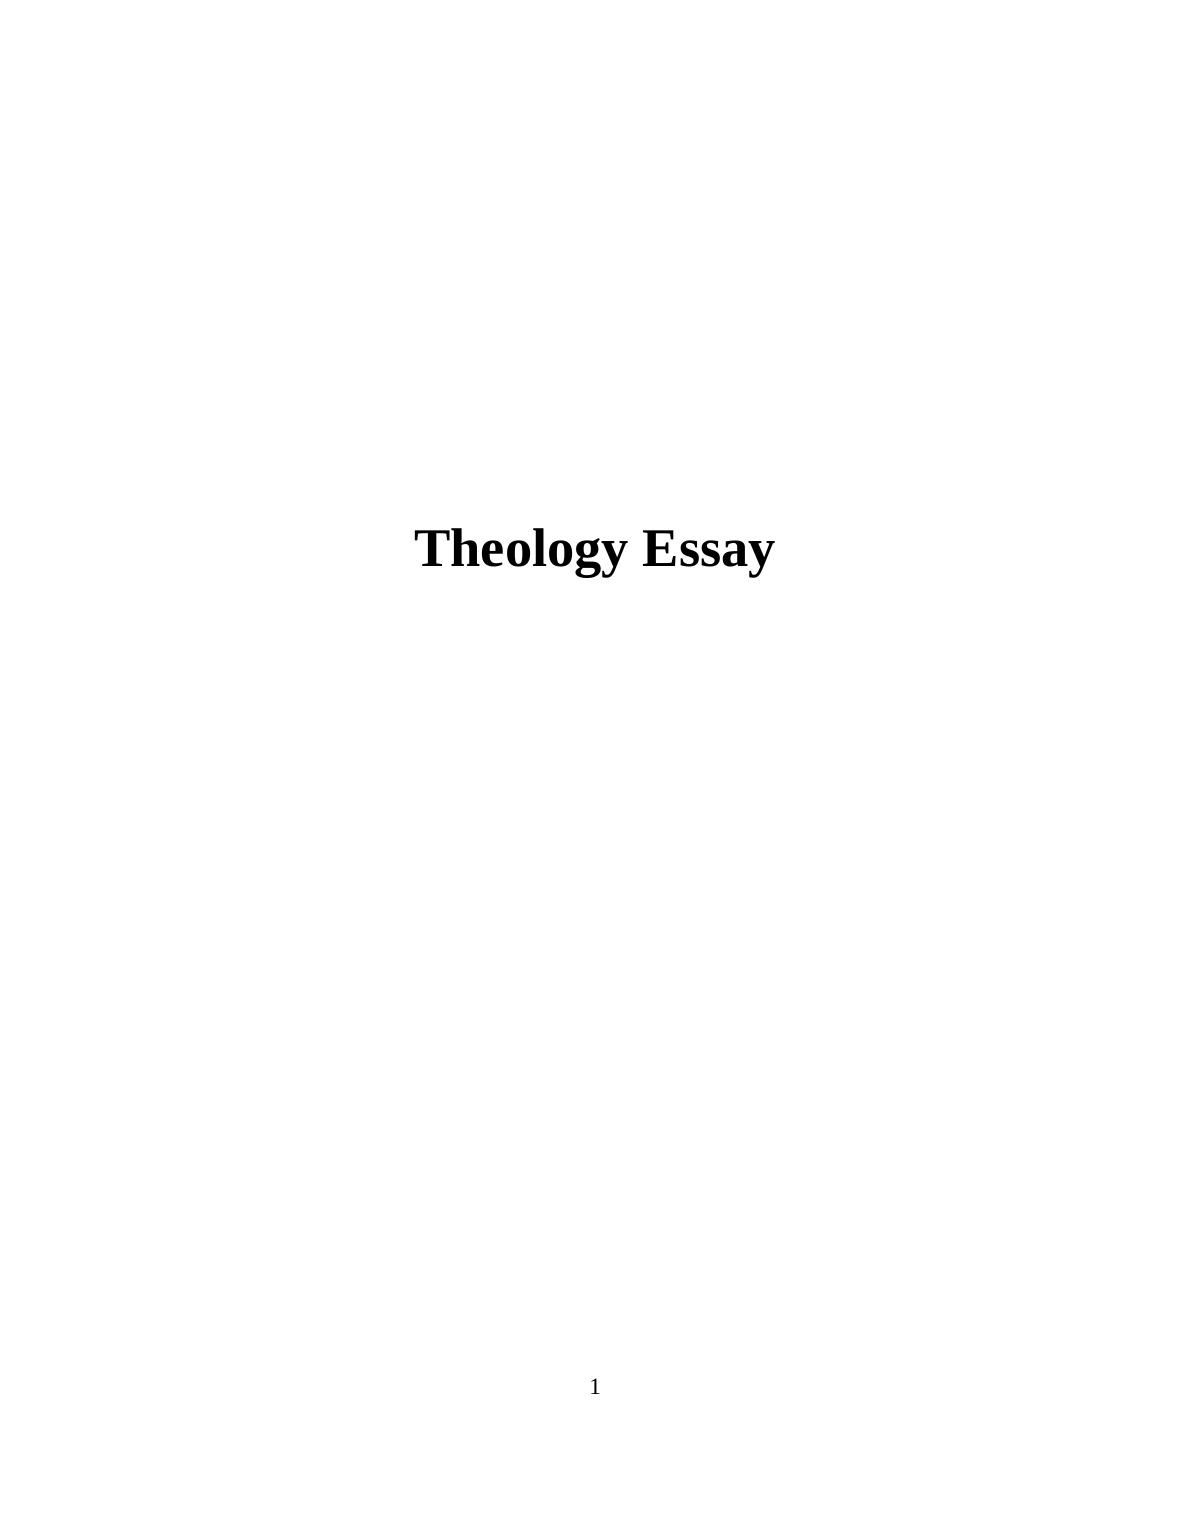 essay on christian theology